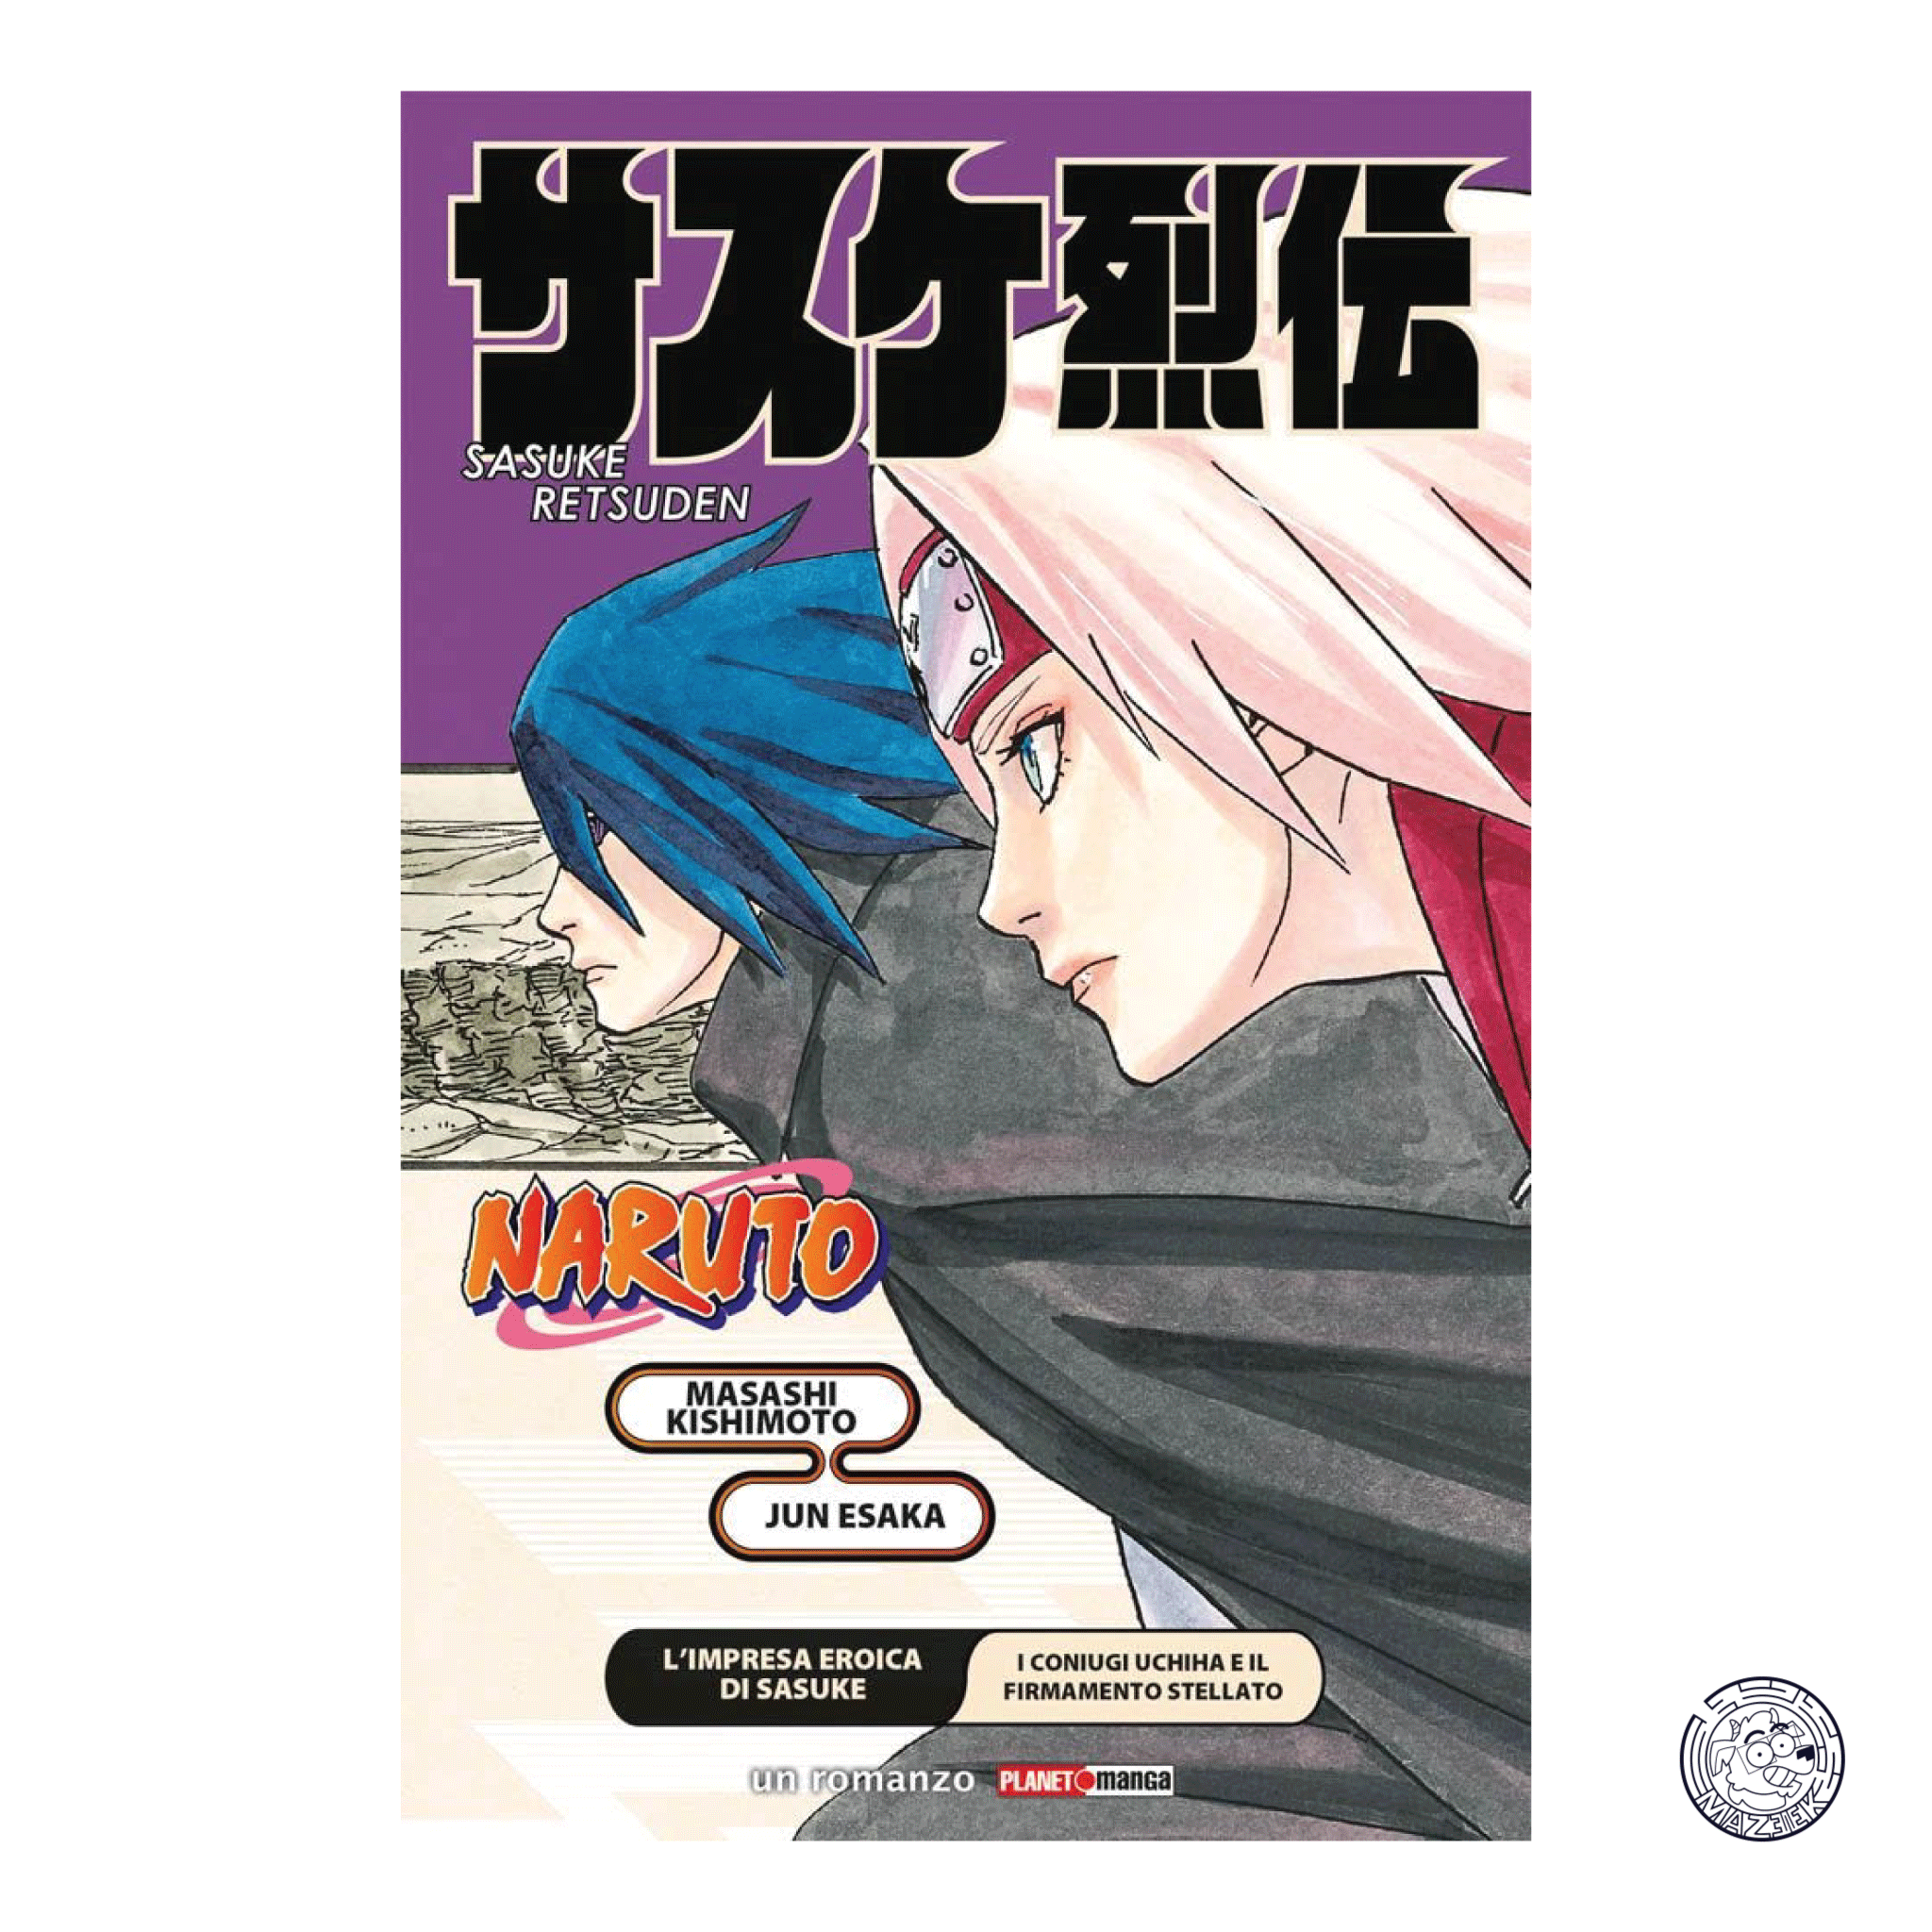 Naruto Novel: Sasuke's Heroic Feat